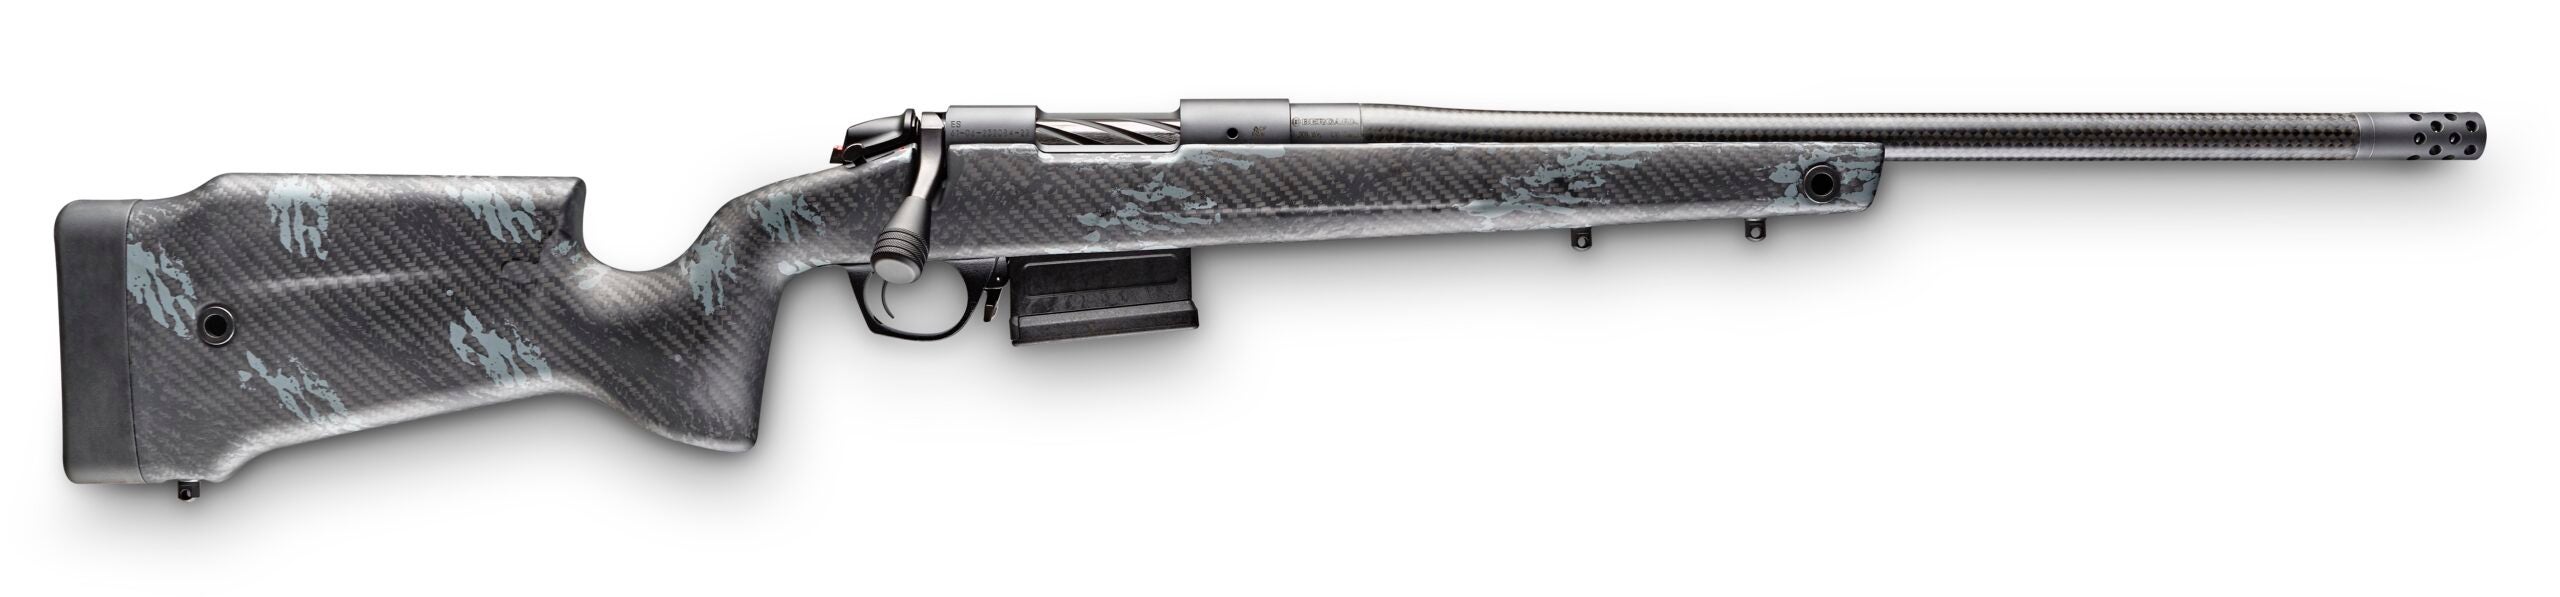 Bergara Crest Carbon rifle on a white background